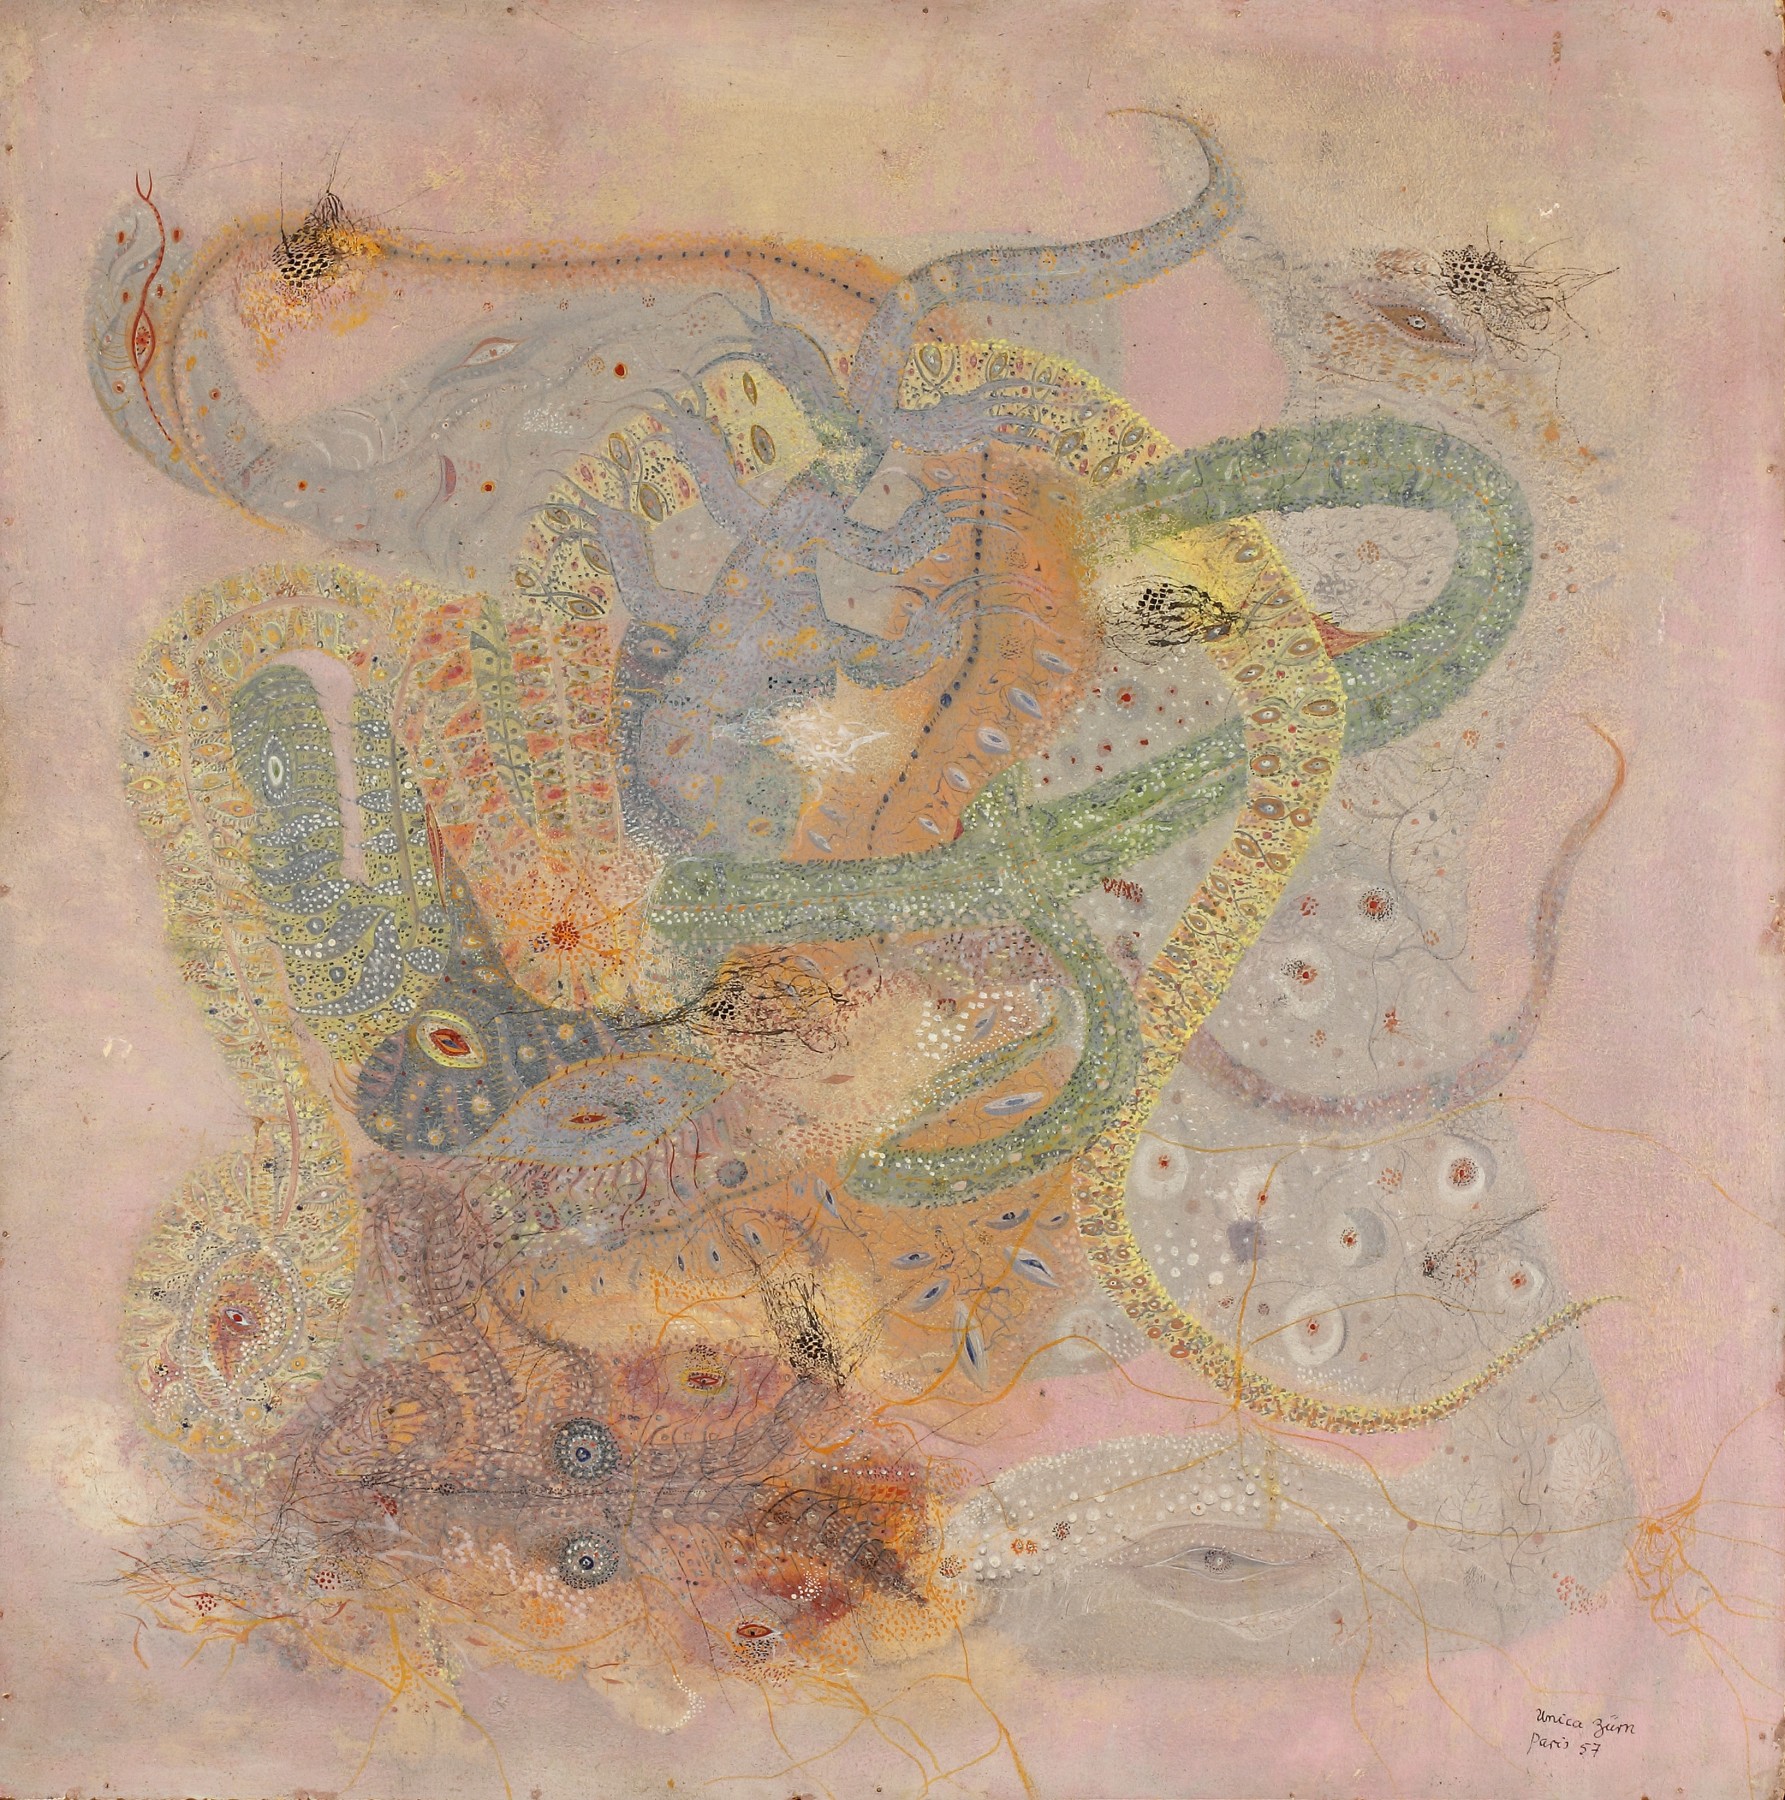 Unica Zürn&nbsp;(1916-1970) Germany/France, La Serpenta (The Serpent), 1957, Oil on panel, 19.5 x 19.5 in